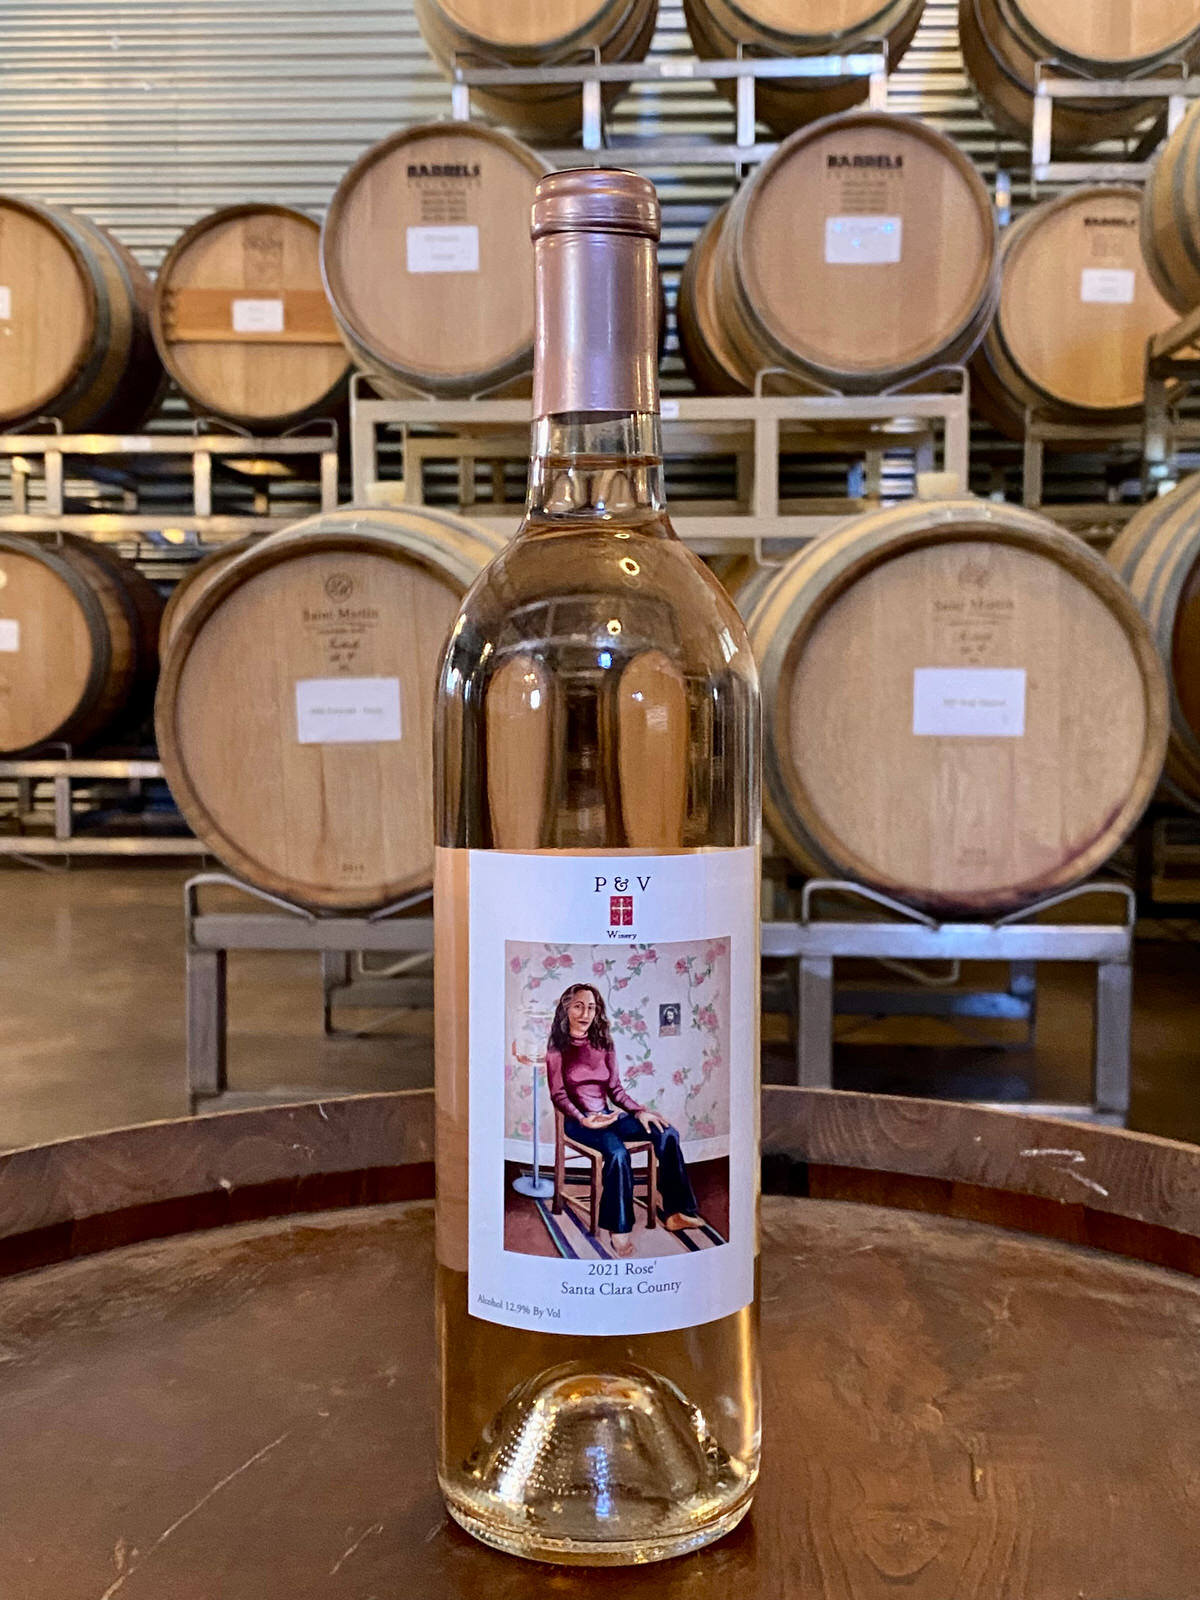 2021 Santa Clara County Rose - P and V Winery